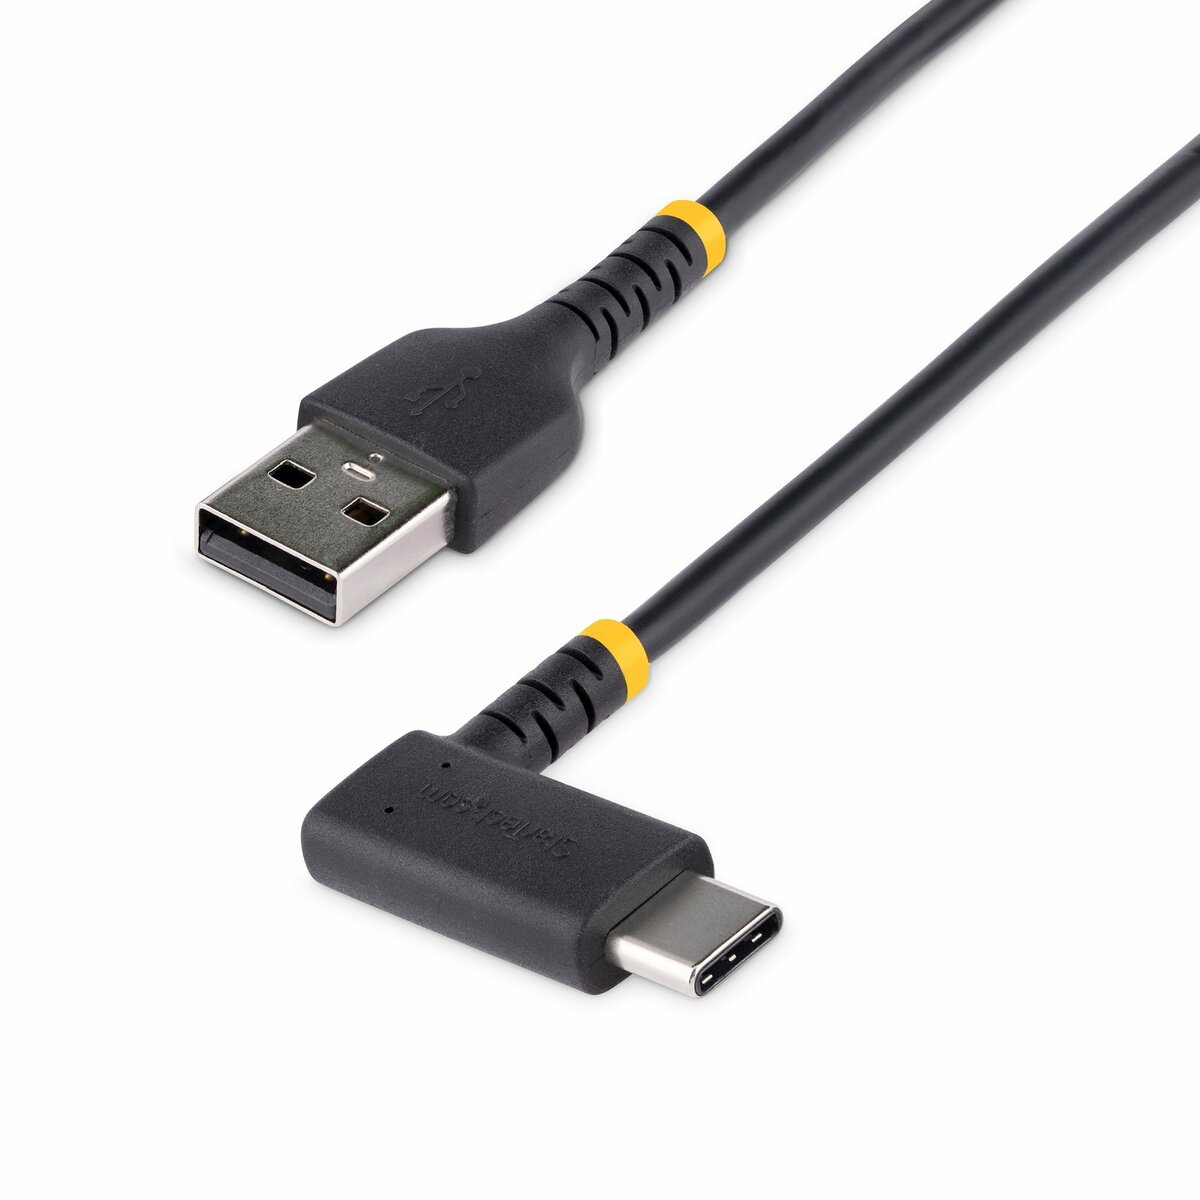 Lenovo USB-C to USB-C Cable 2m